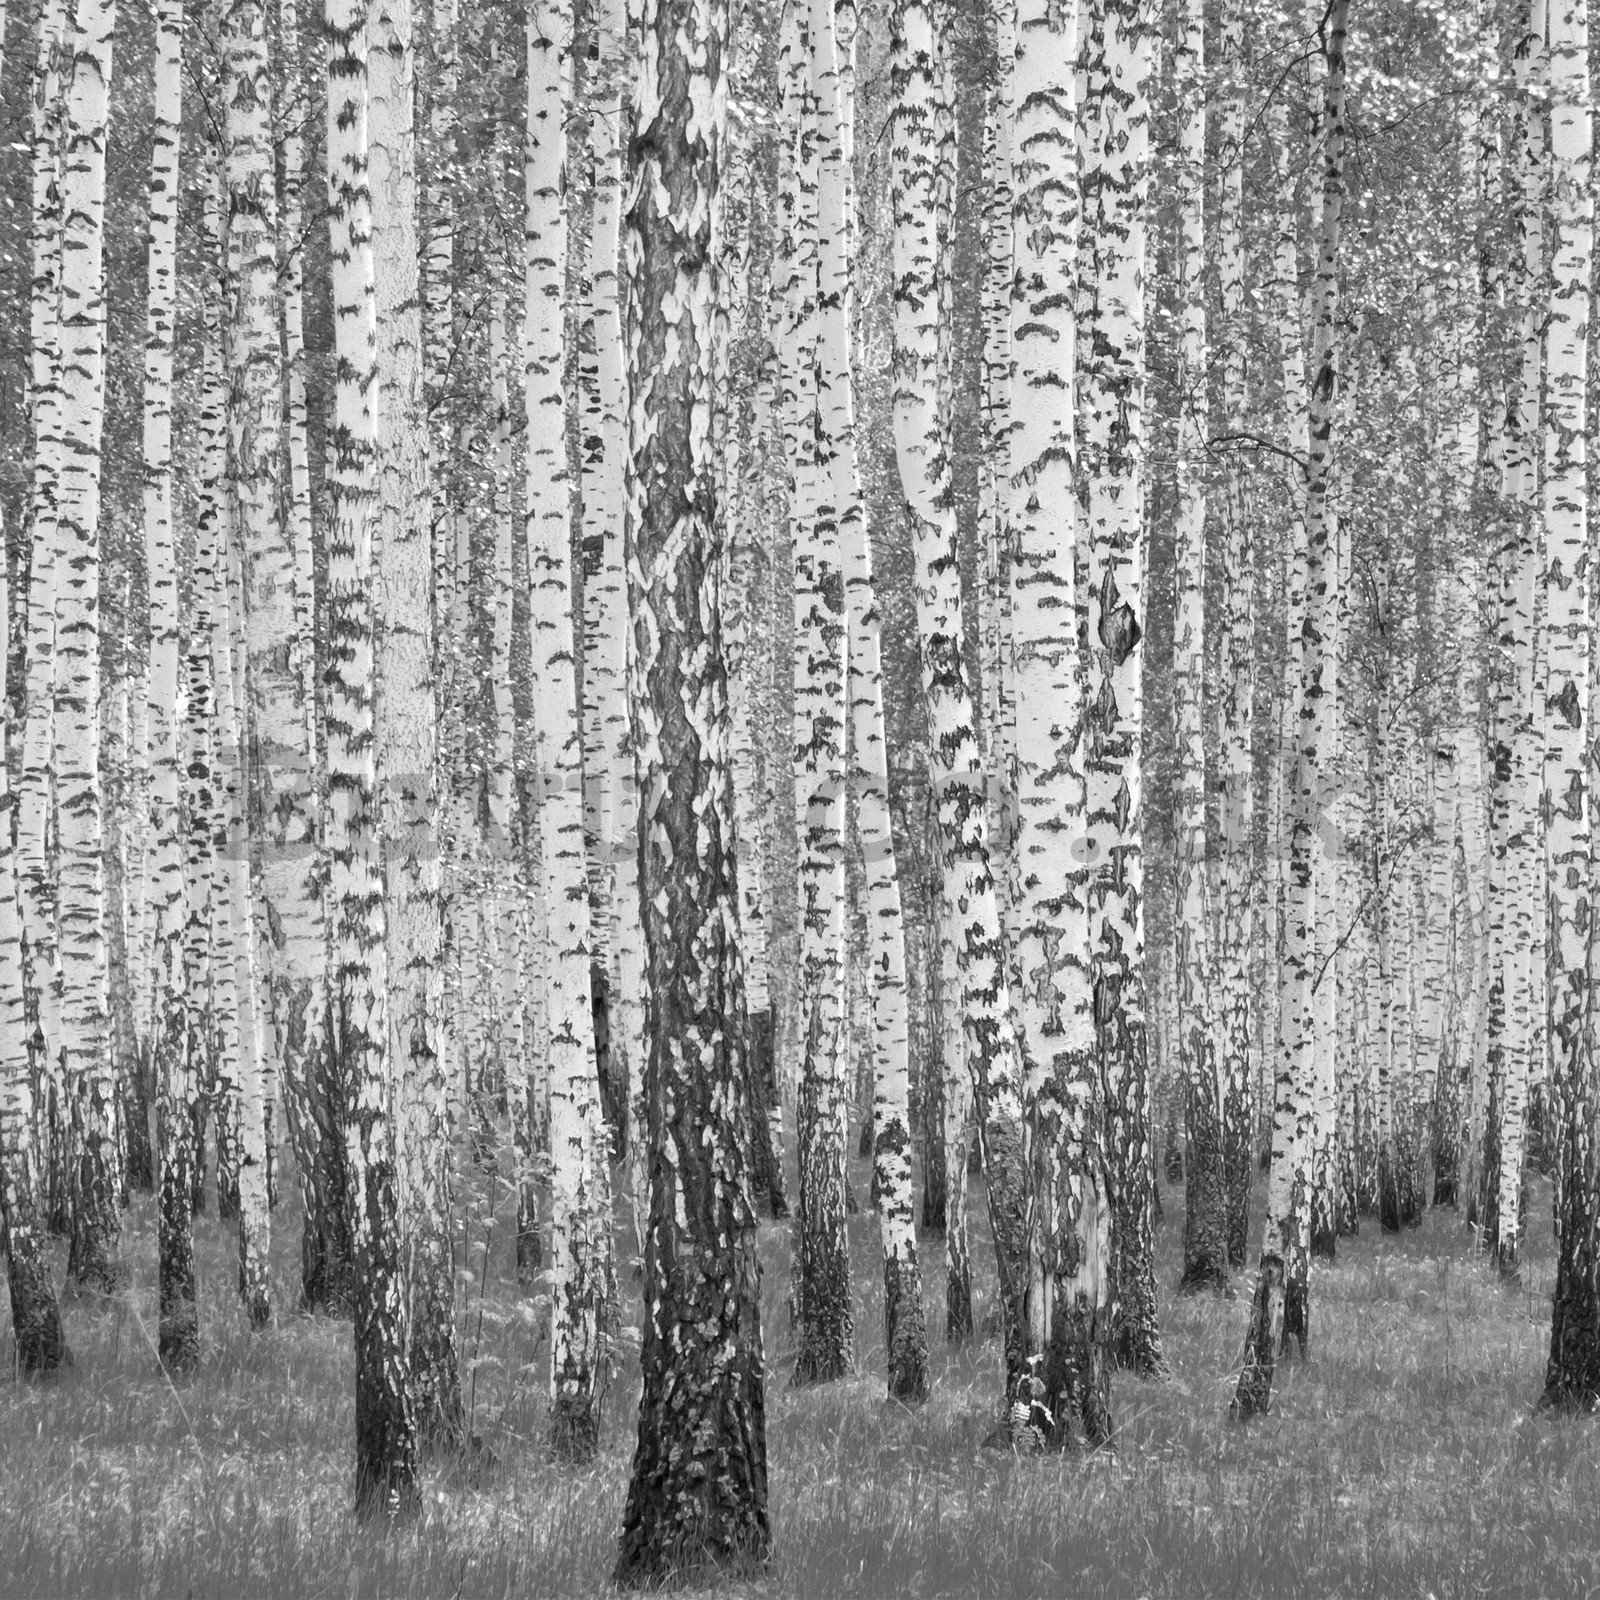 Wall mural vlies: Black and white birch trees - 368x254 cm